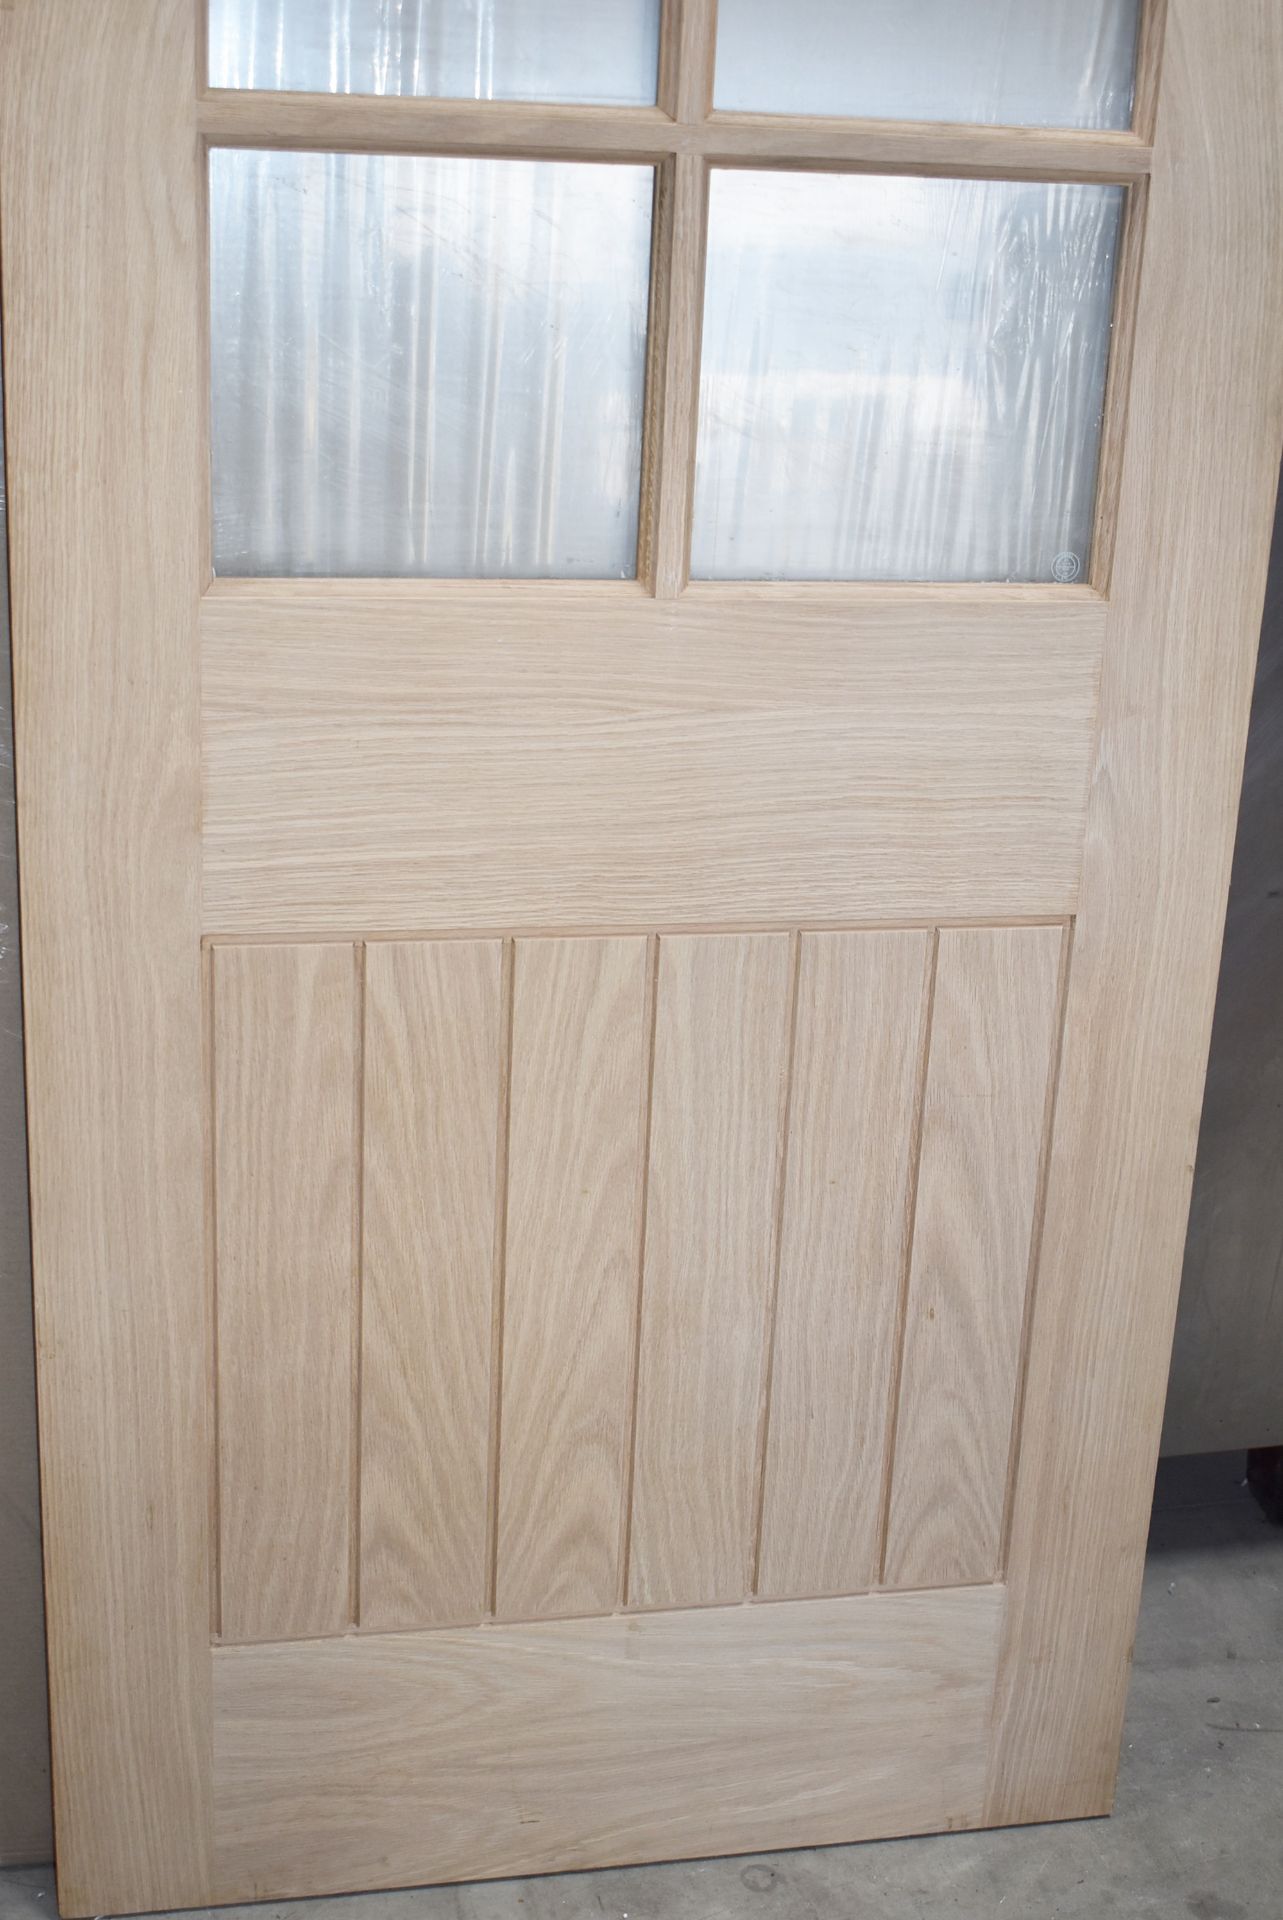 1 x Solid Oak Suffolk Internal FD30 Fire Door by XL Joinery - Unused - Size: 198x84x4.5 cms - - Image 2 of 6